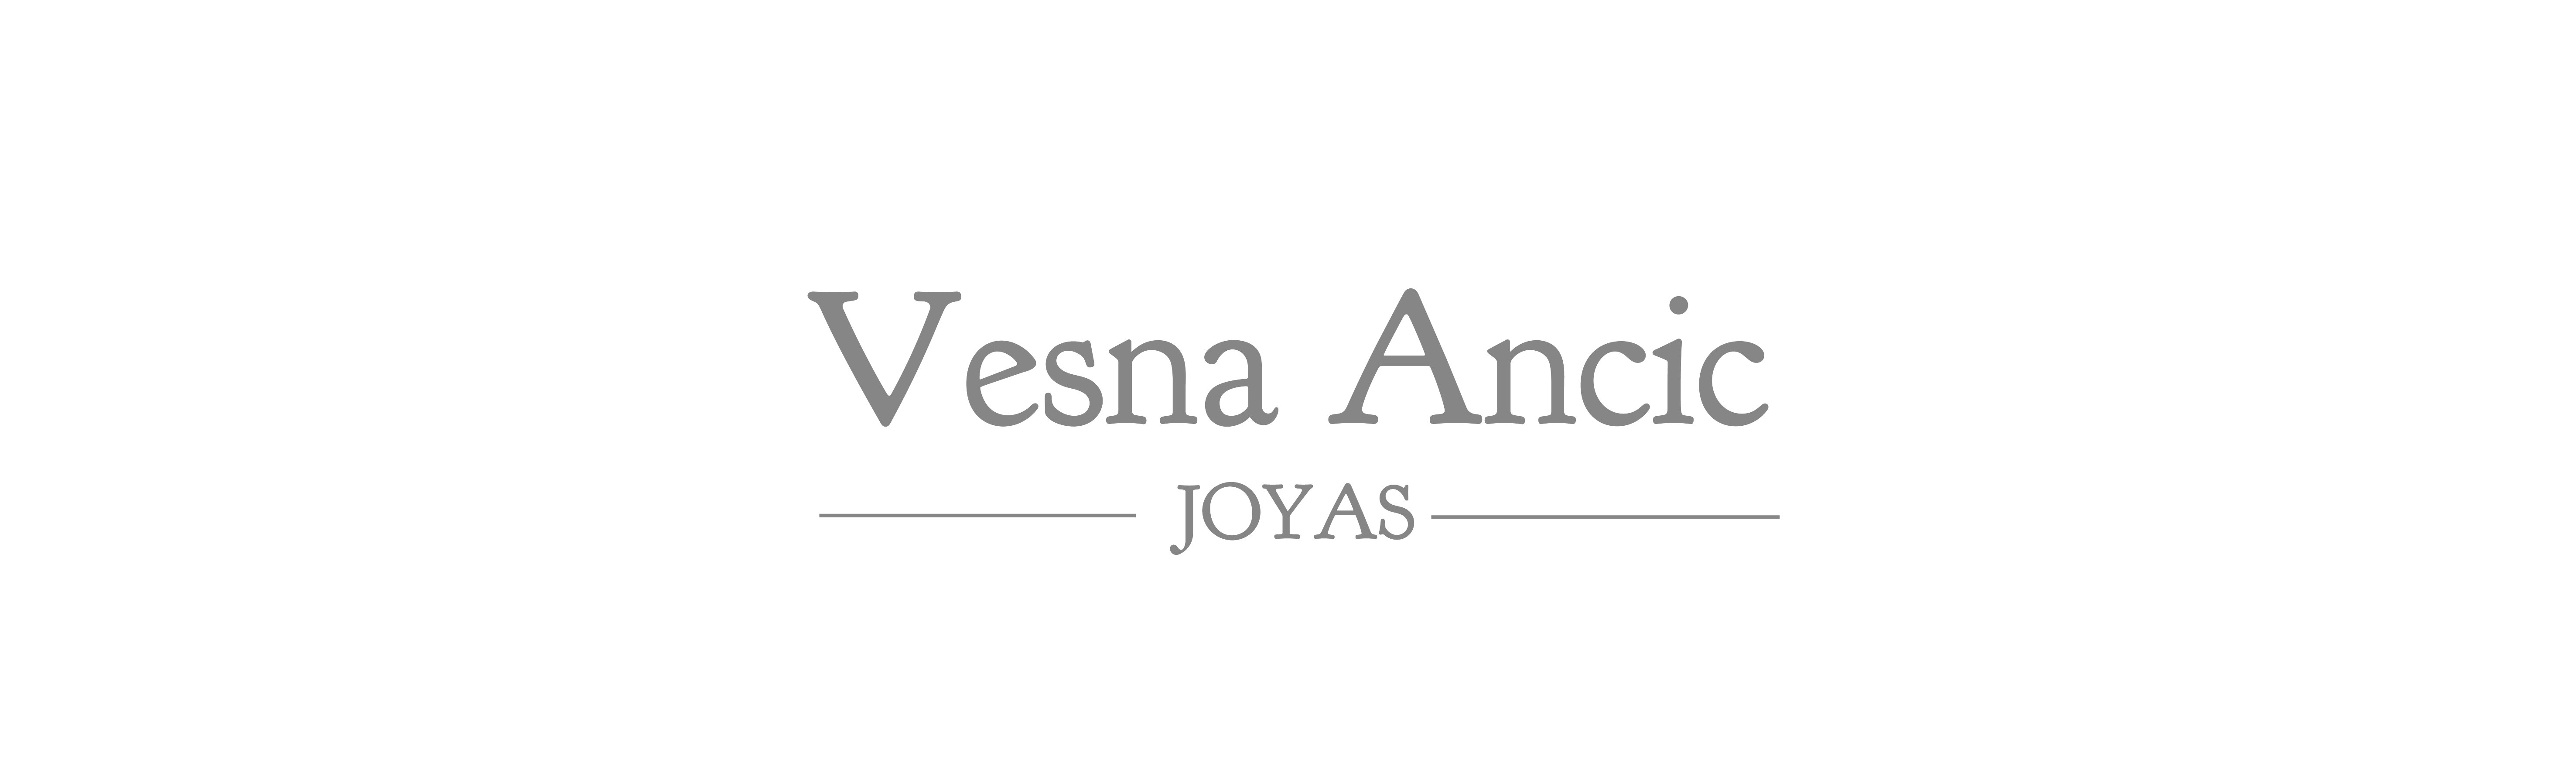 Vesna Ancic Joyas